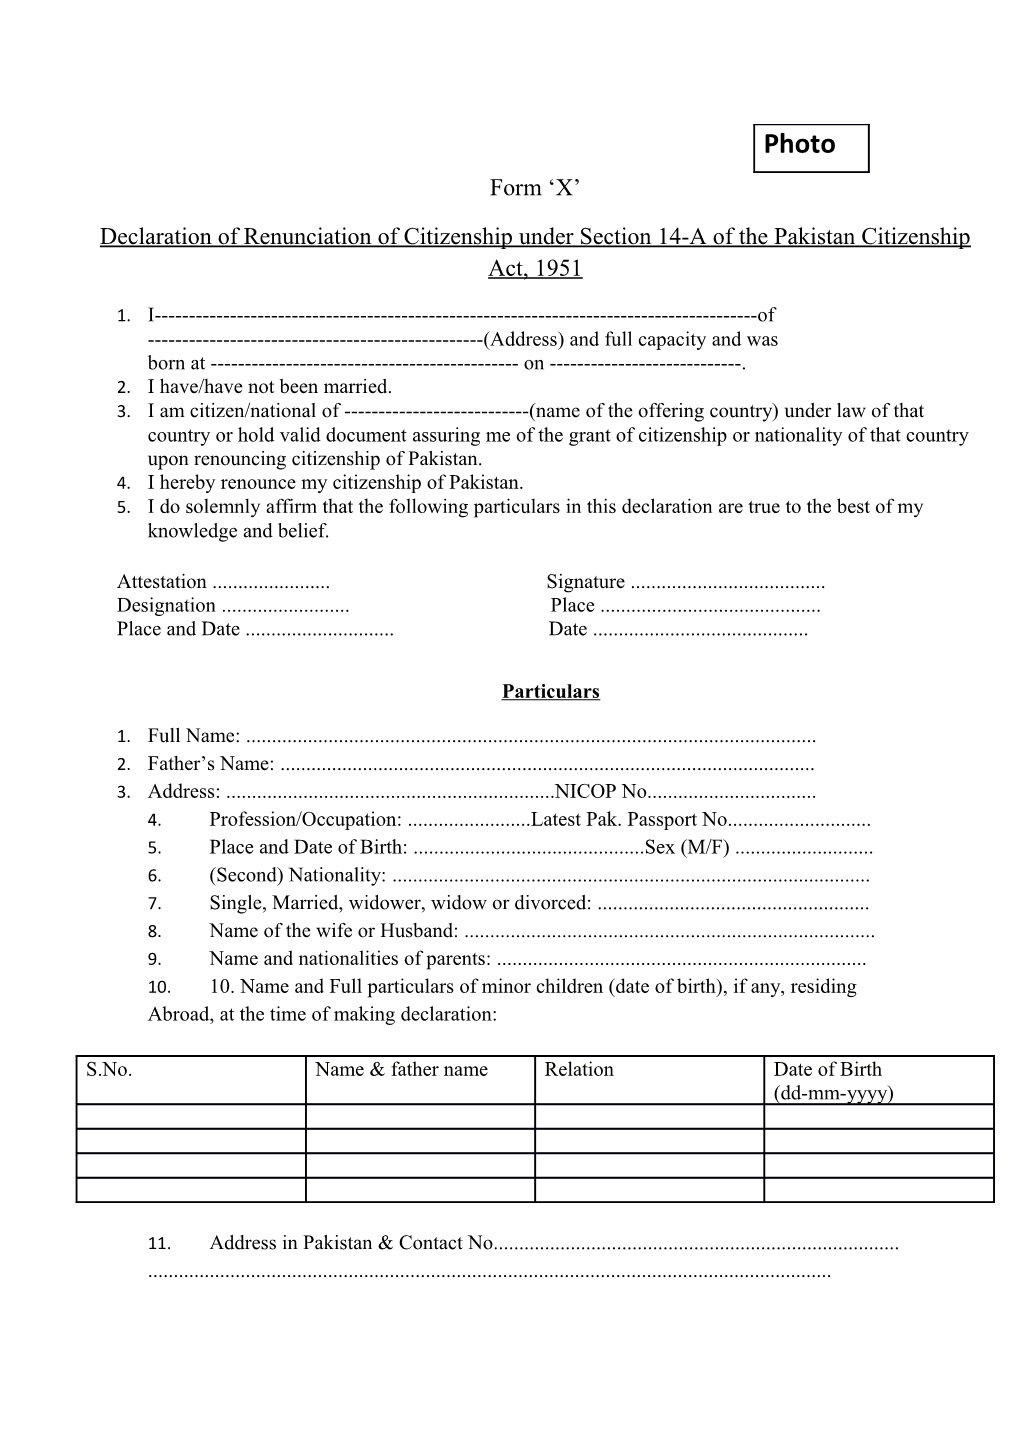 Declaration of Renunciation of Citizenship Under Section 14-A of the Pakistan Citizenship